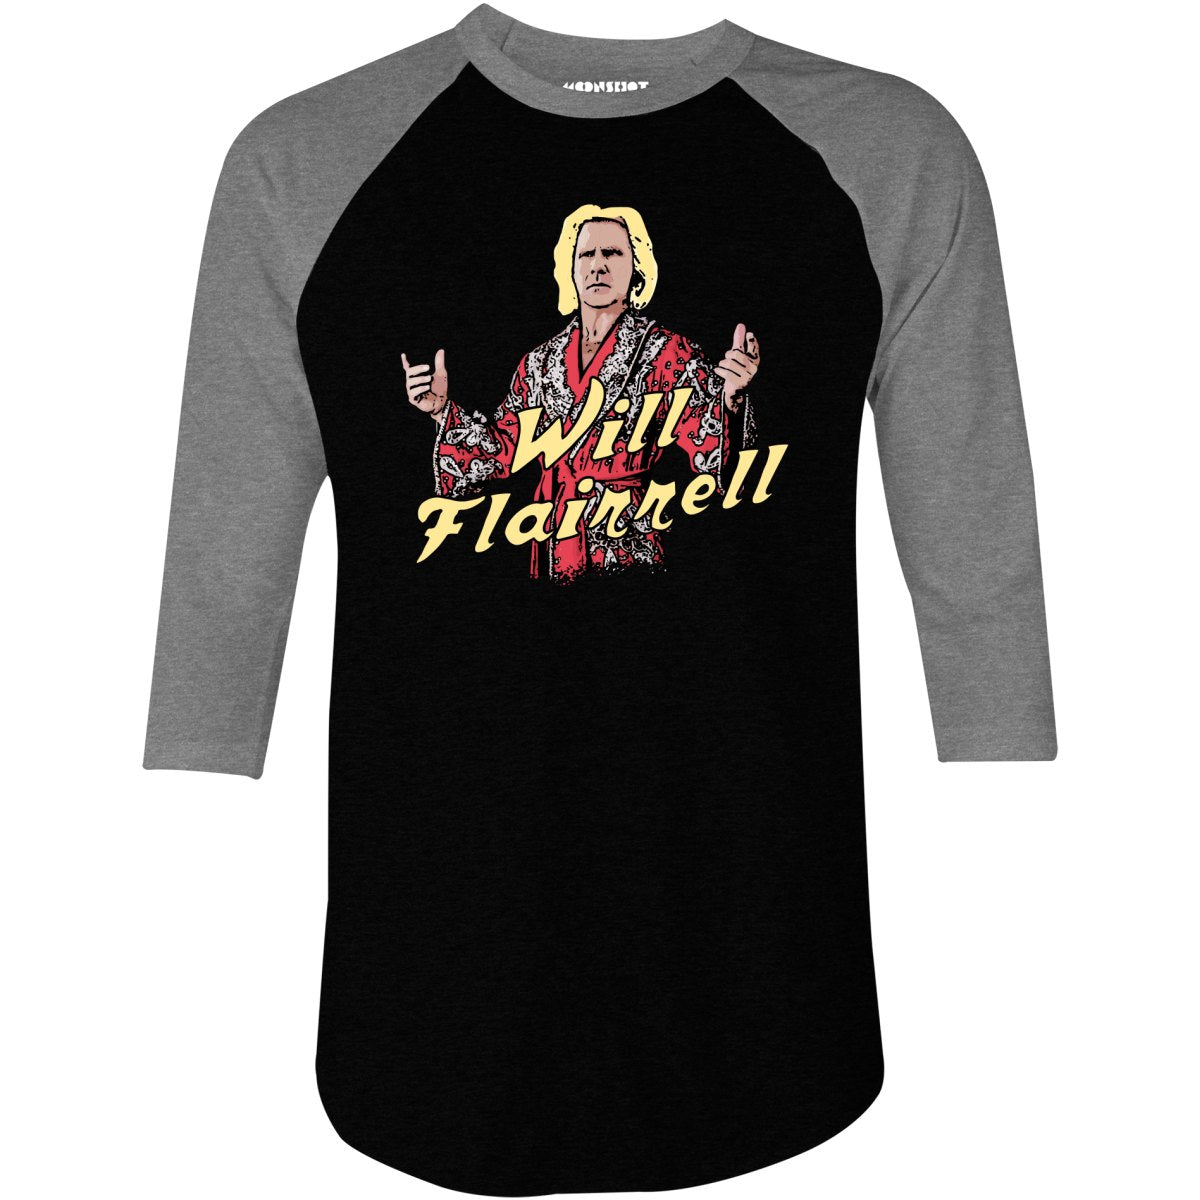 Will Flairrell - Ric Flair Will Ferrell Mashup - 3/4 Sleeve Raglan T-Shirt